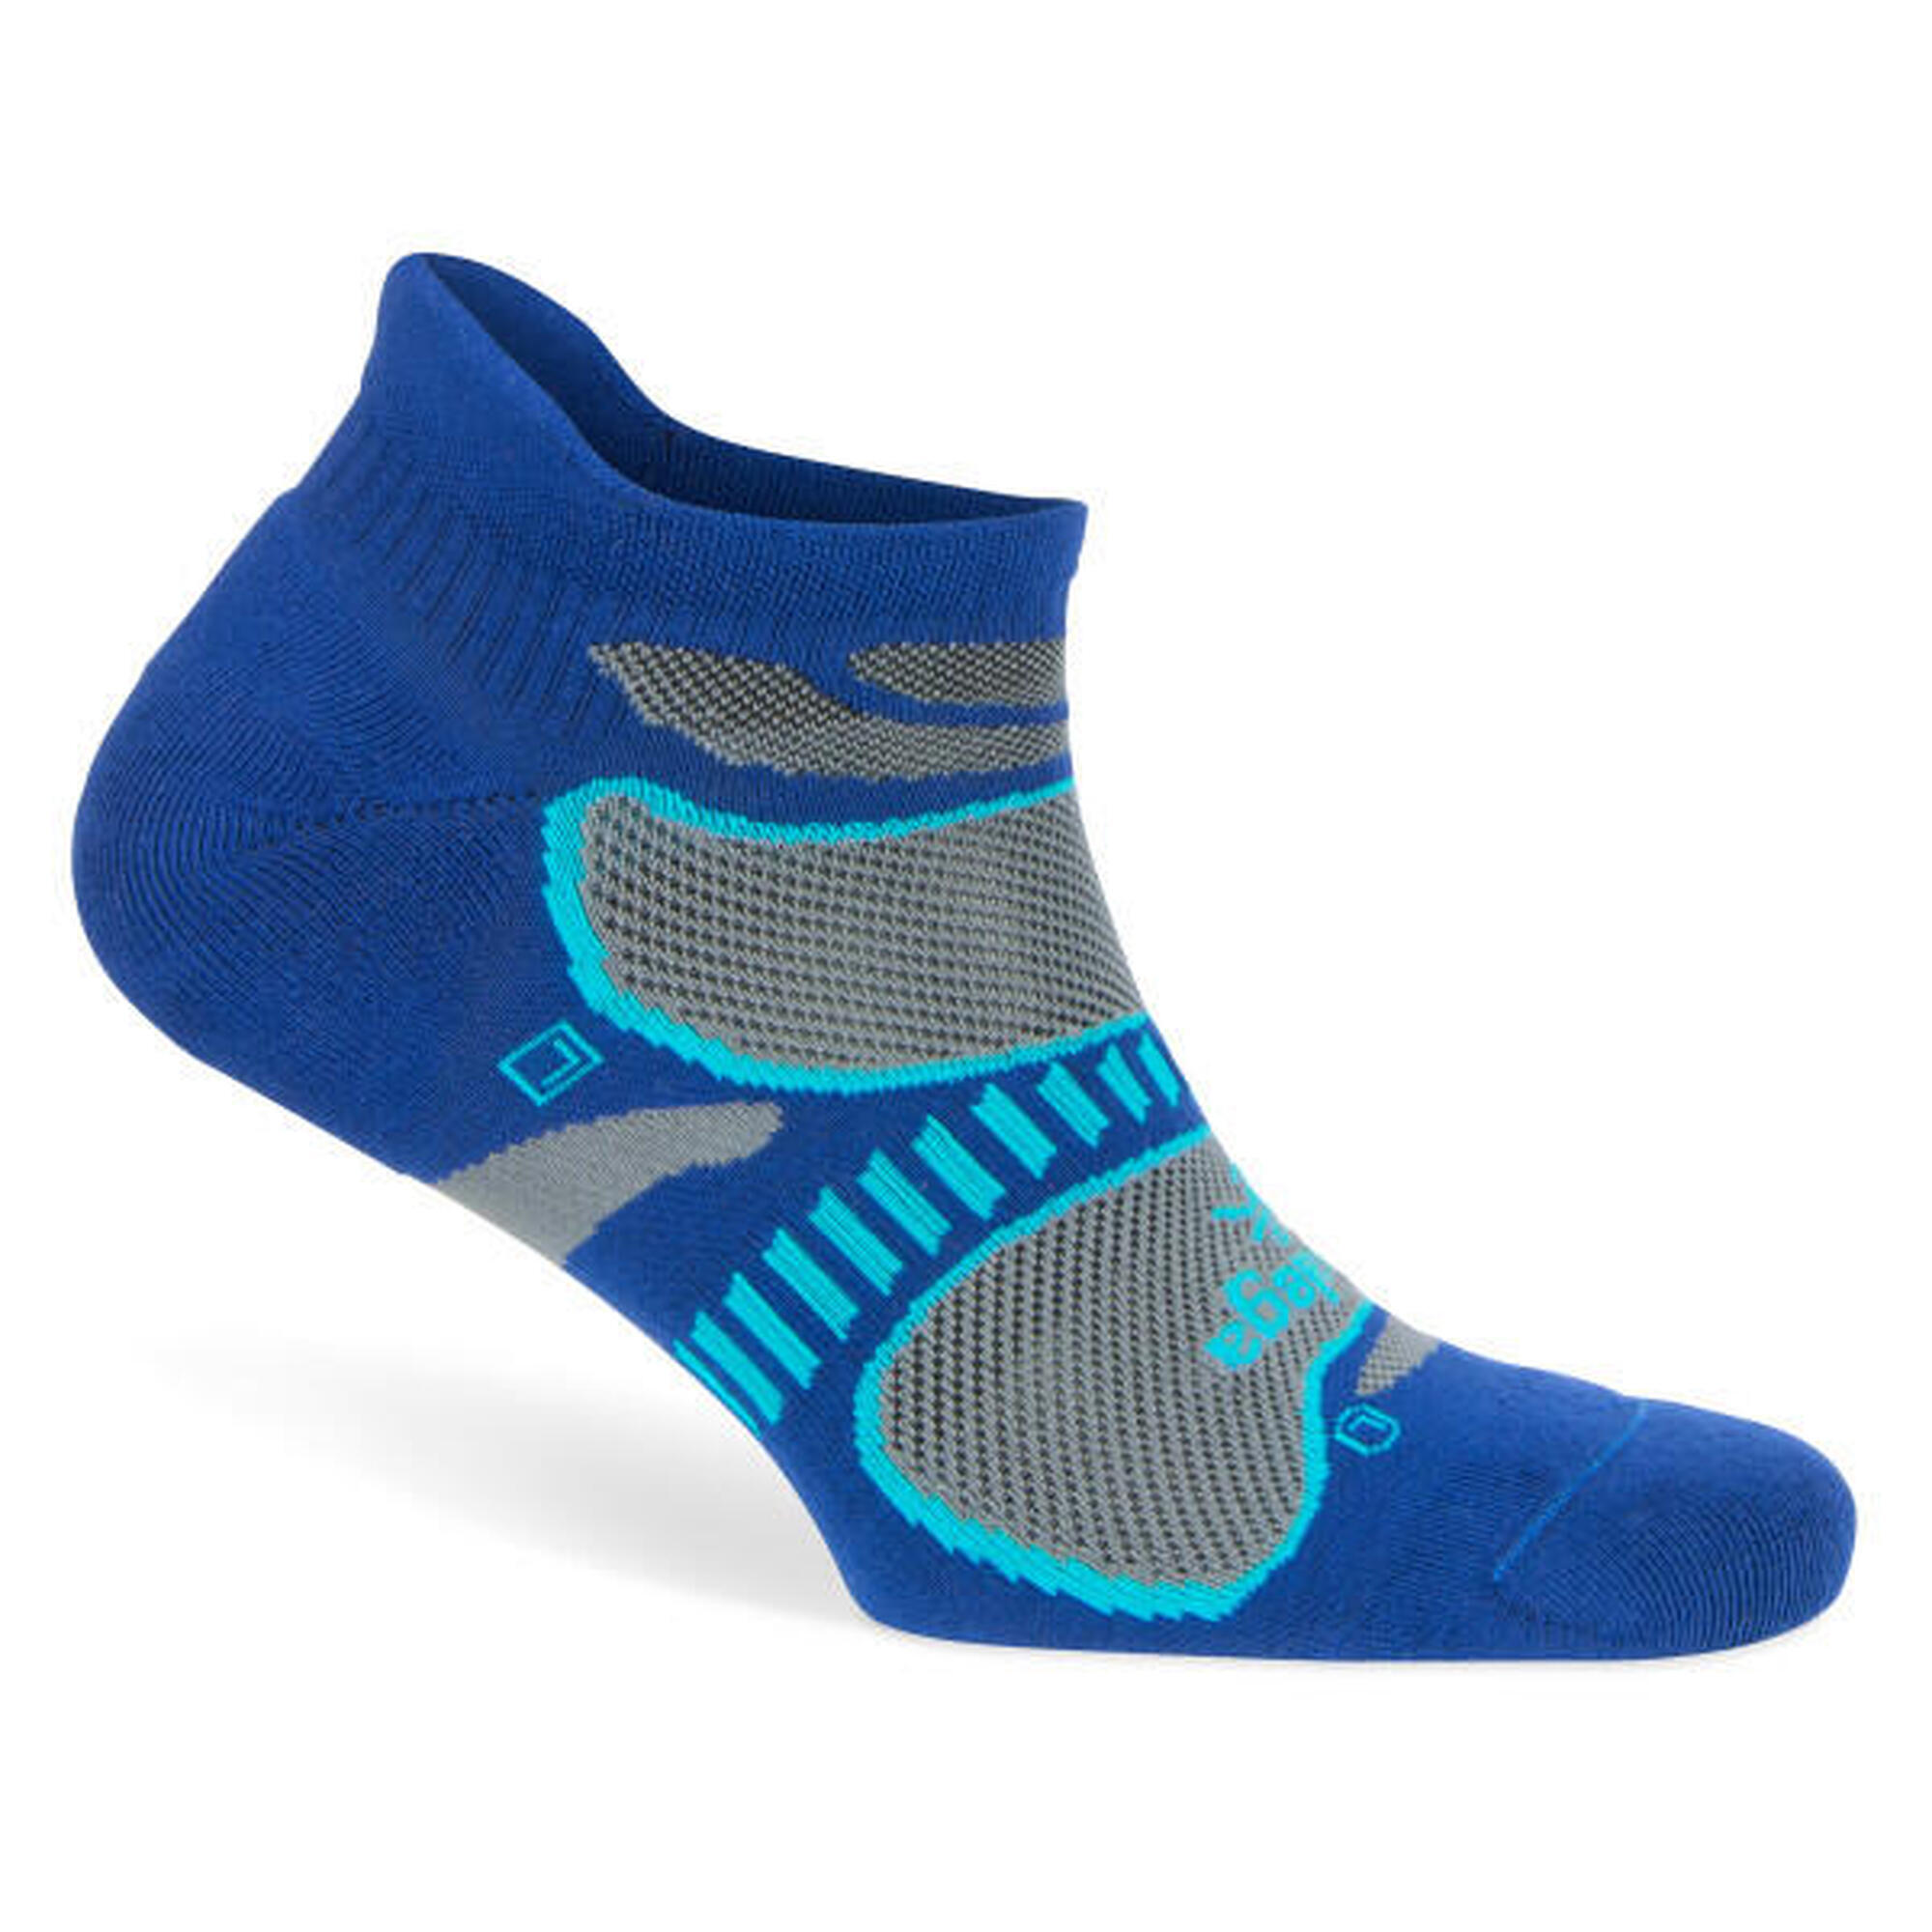 Balega running calcetines: Ligereza, control de la humedad y confort Talla XL